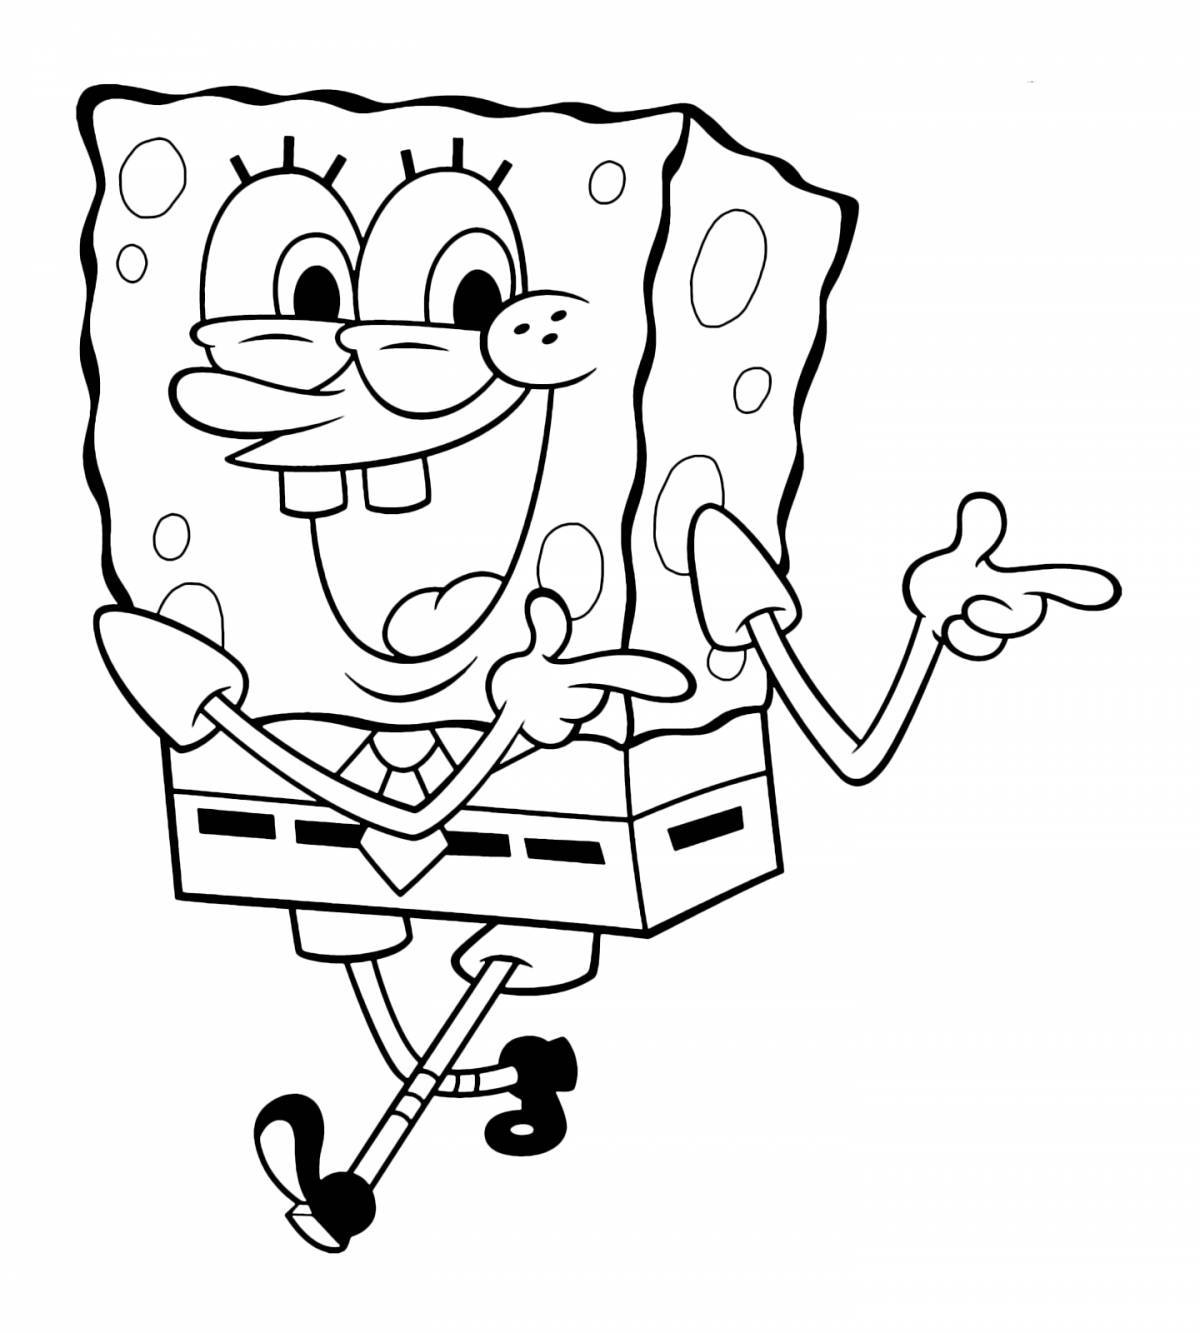 Coloring radiant sponge bob square pants